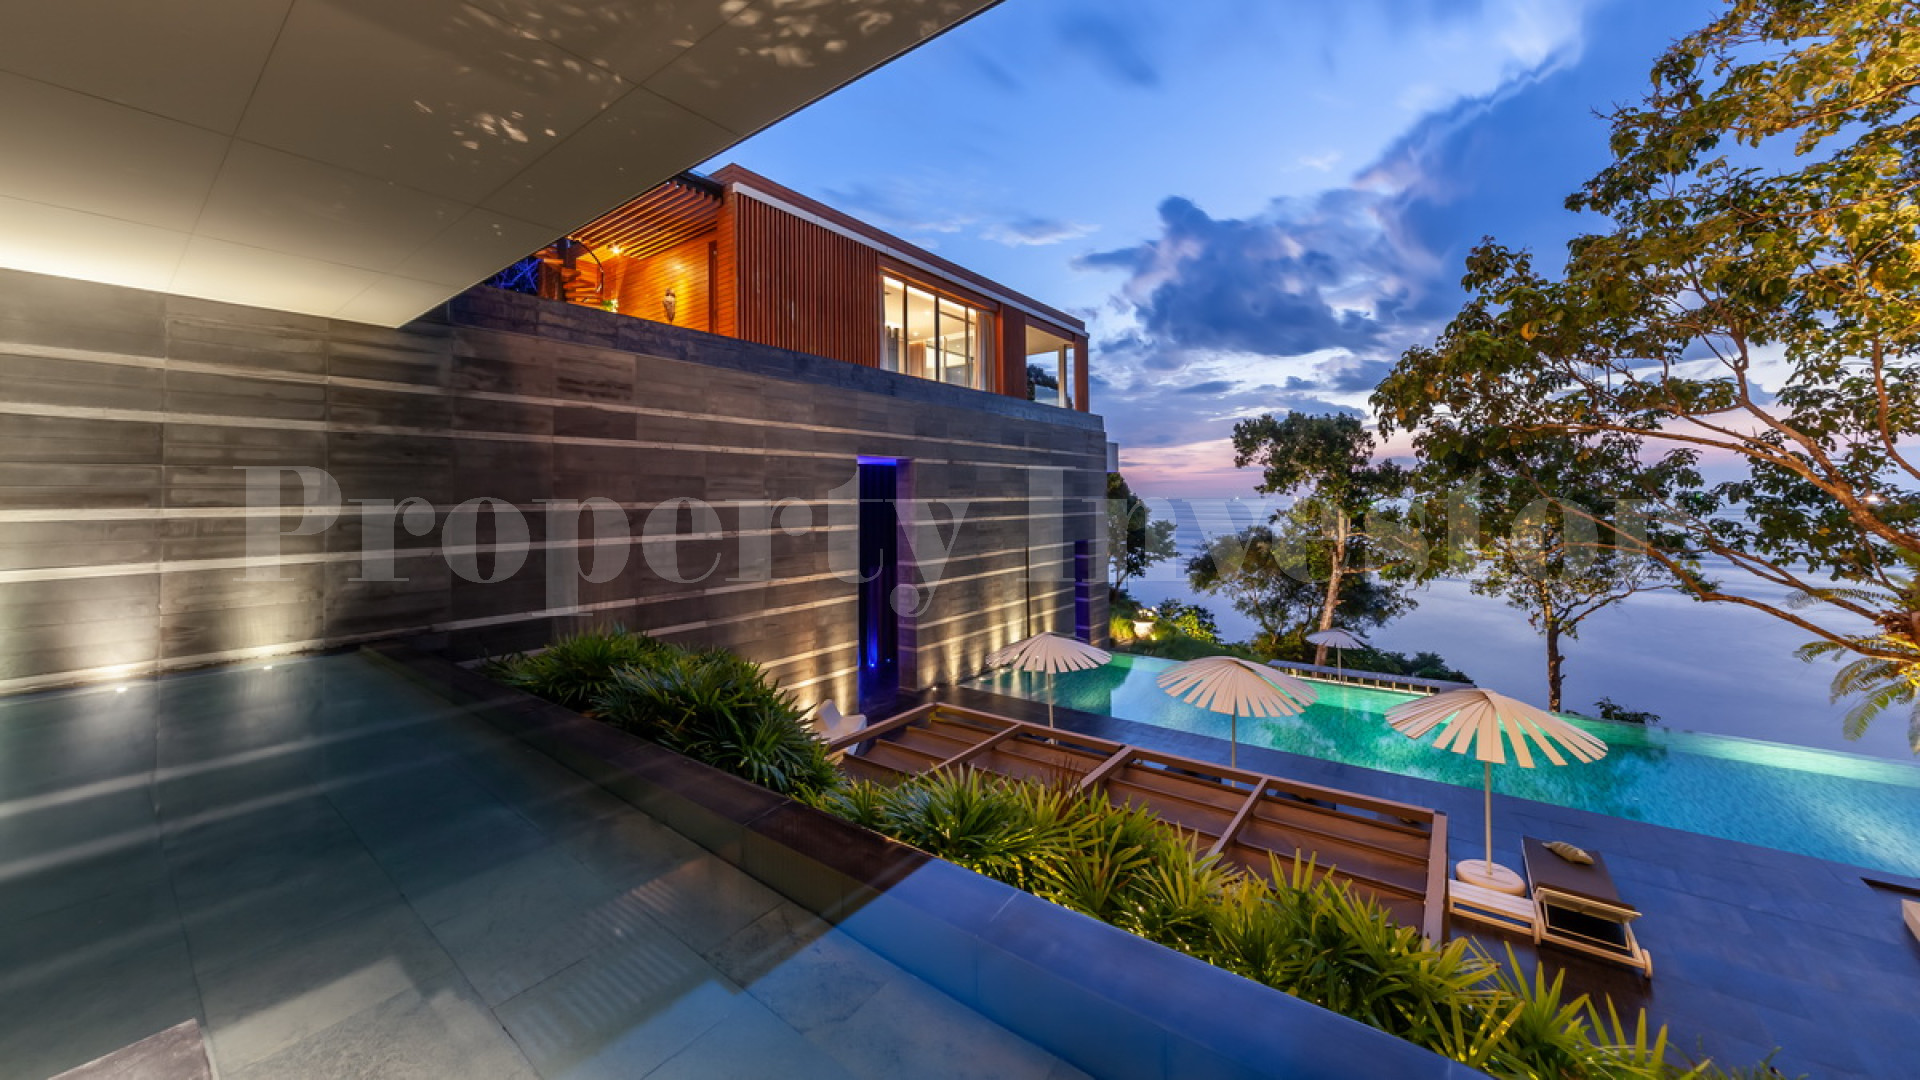 Spectacular 4 Bedroom Luxury Oceanview Villa for Sale on "Millionaire Mile" in Kamala, Phuket